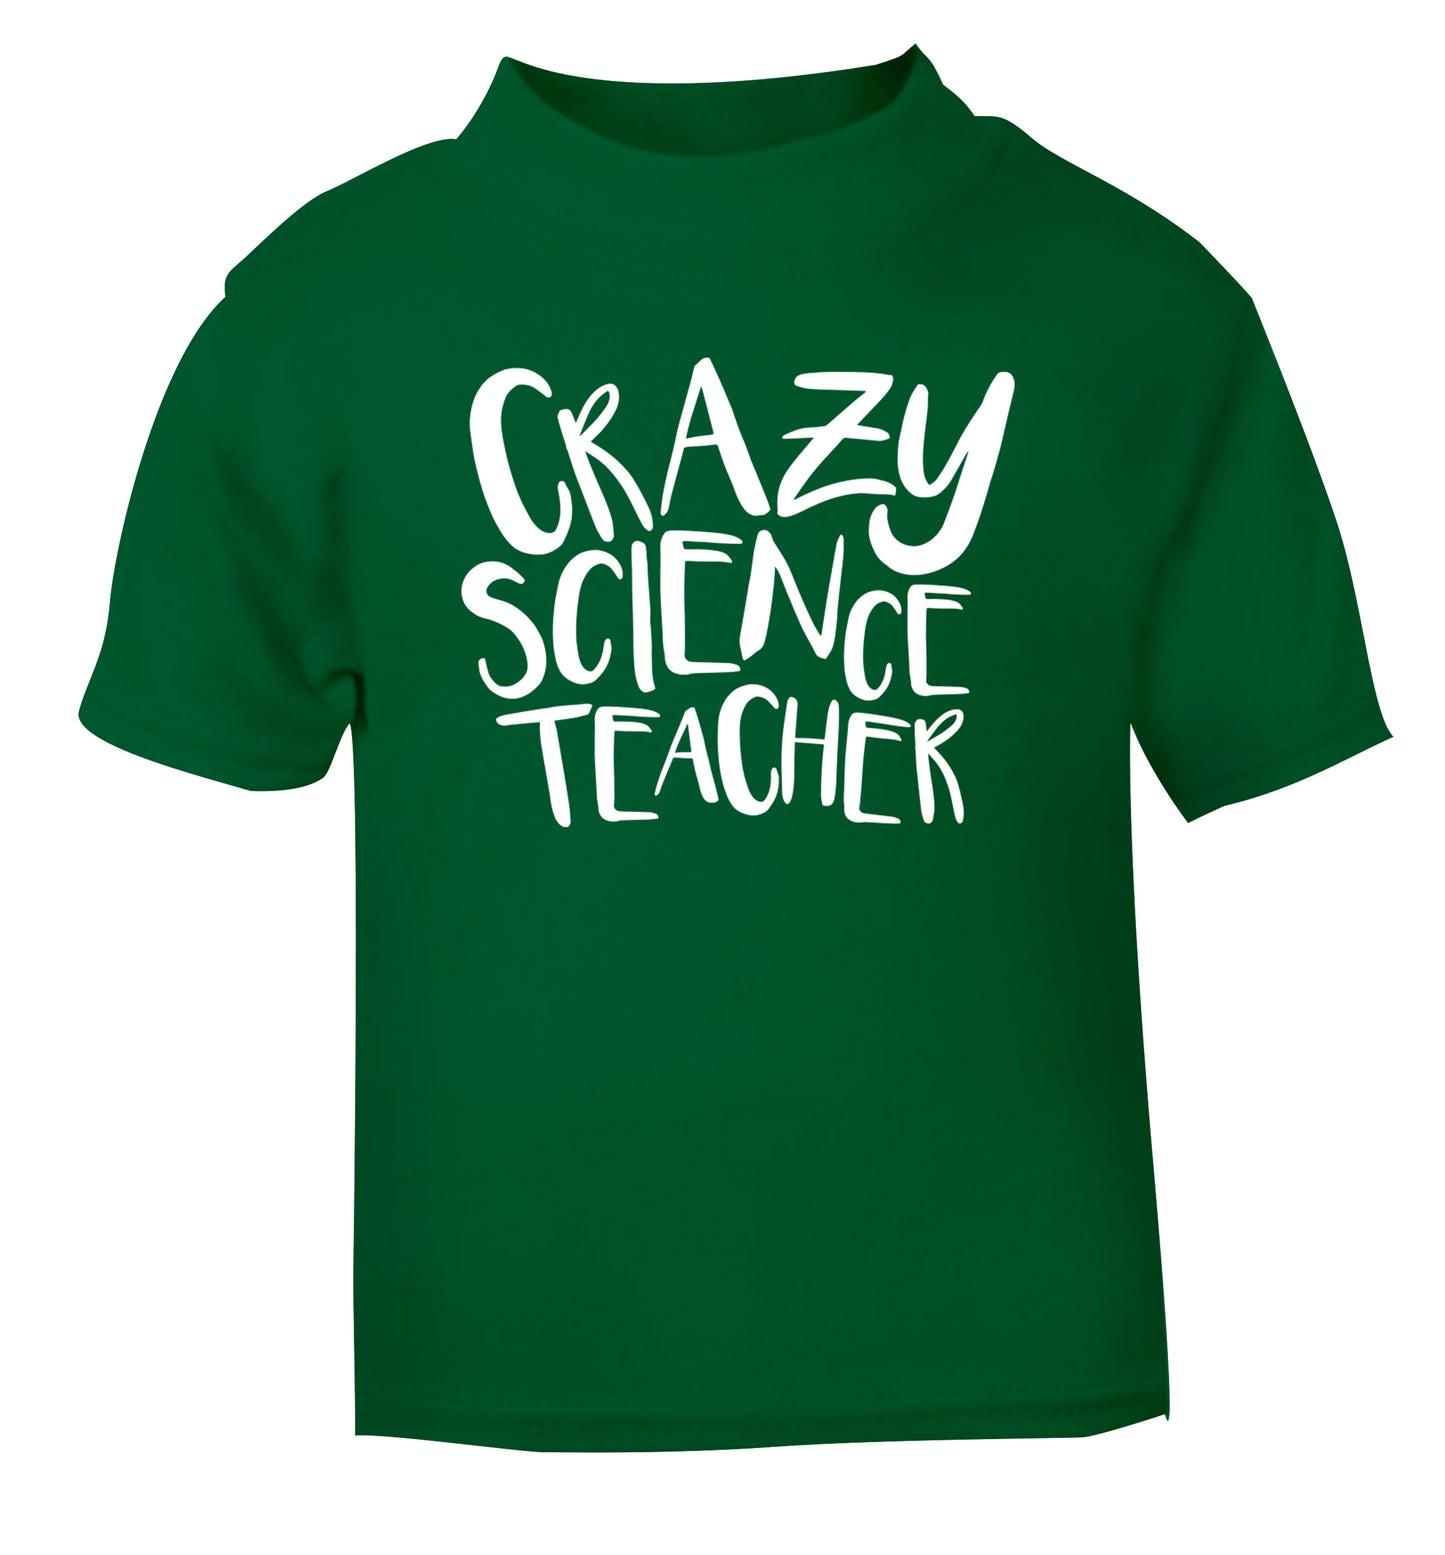 Crazy science teacher green Baby Toddler Tshirt 2 Years